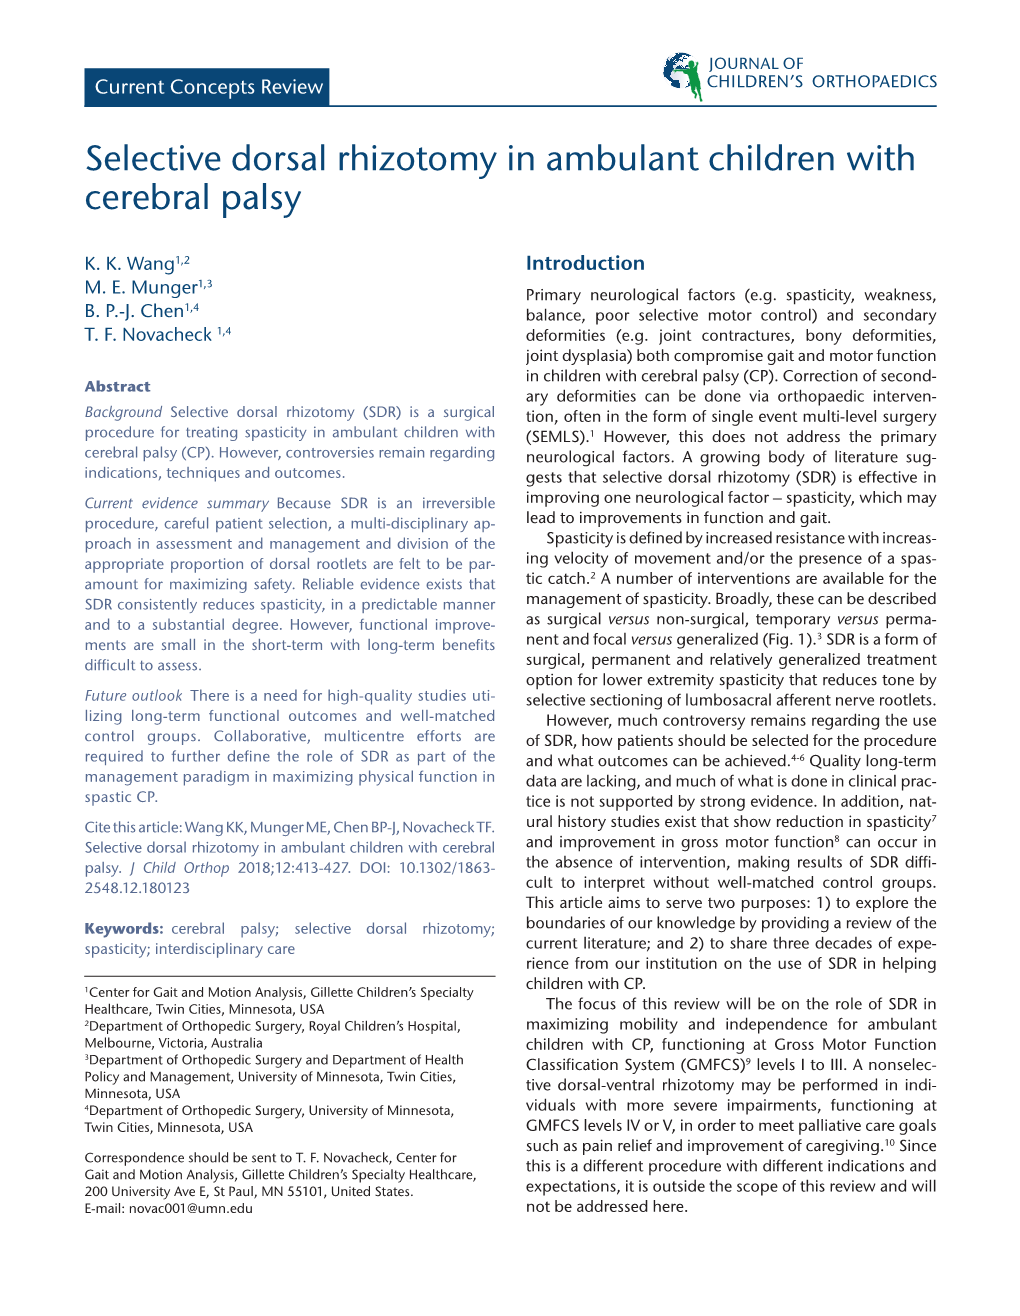 Selective Dorsal Rhizotomy in Ambulant Children with Cerebral Palsy